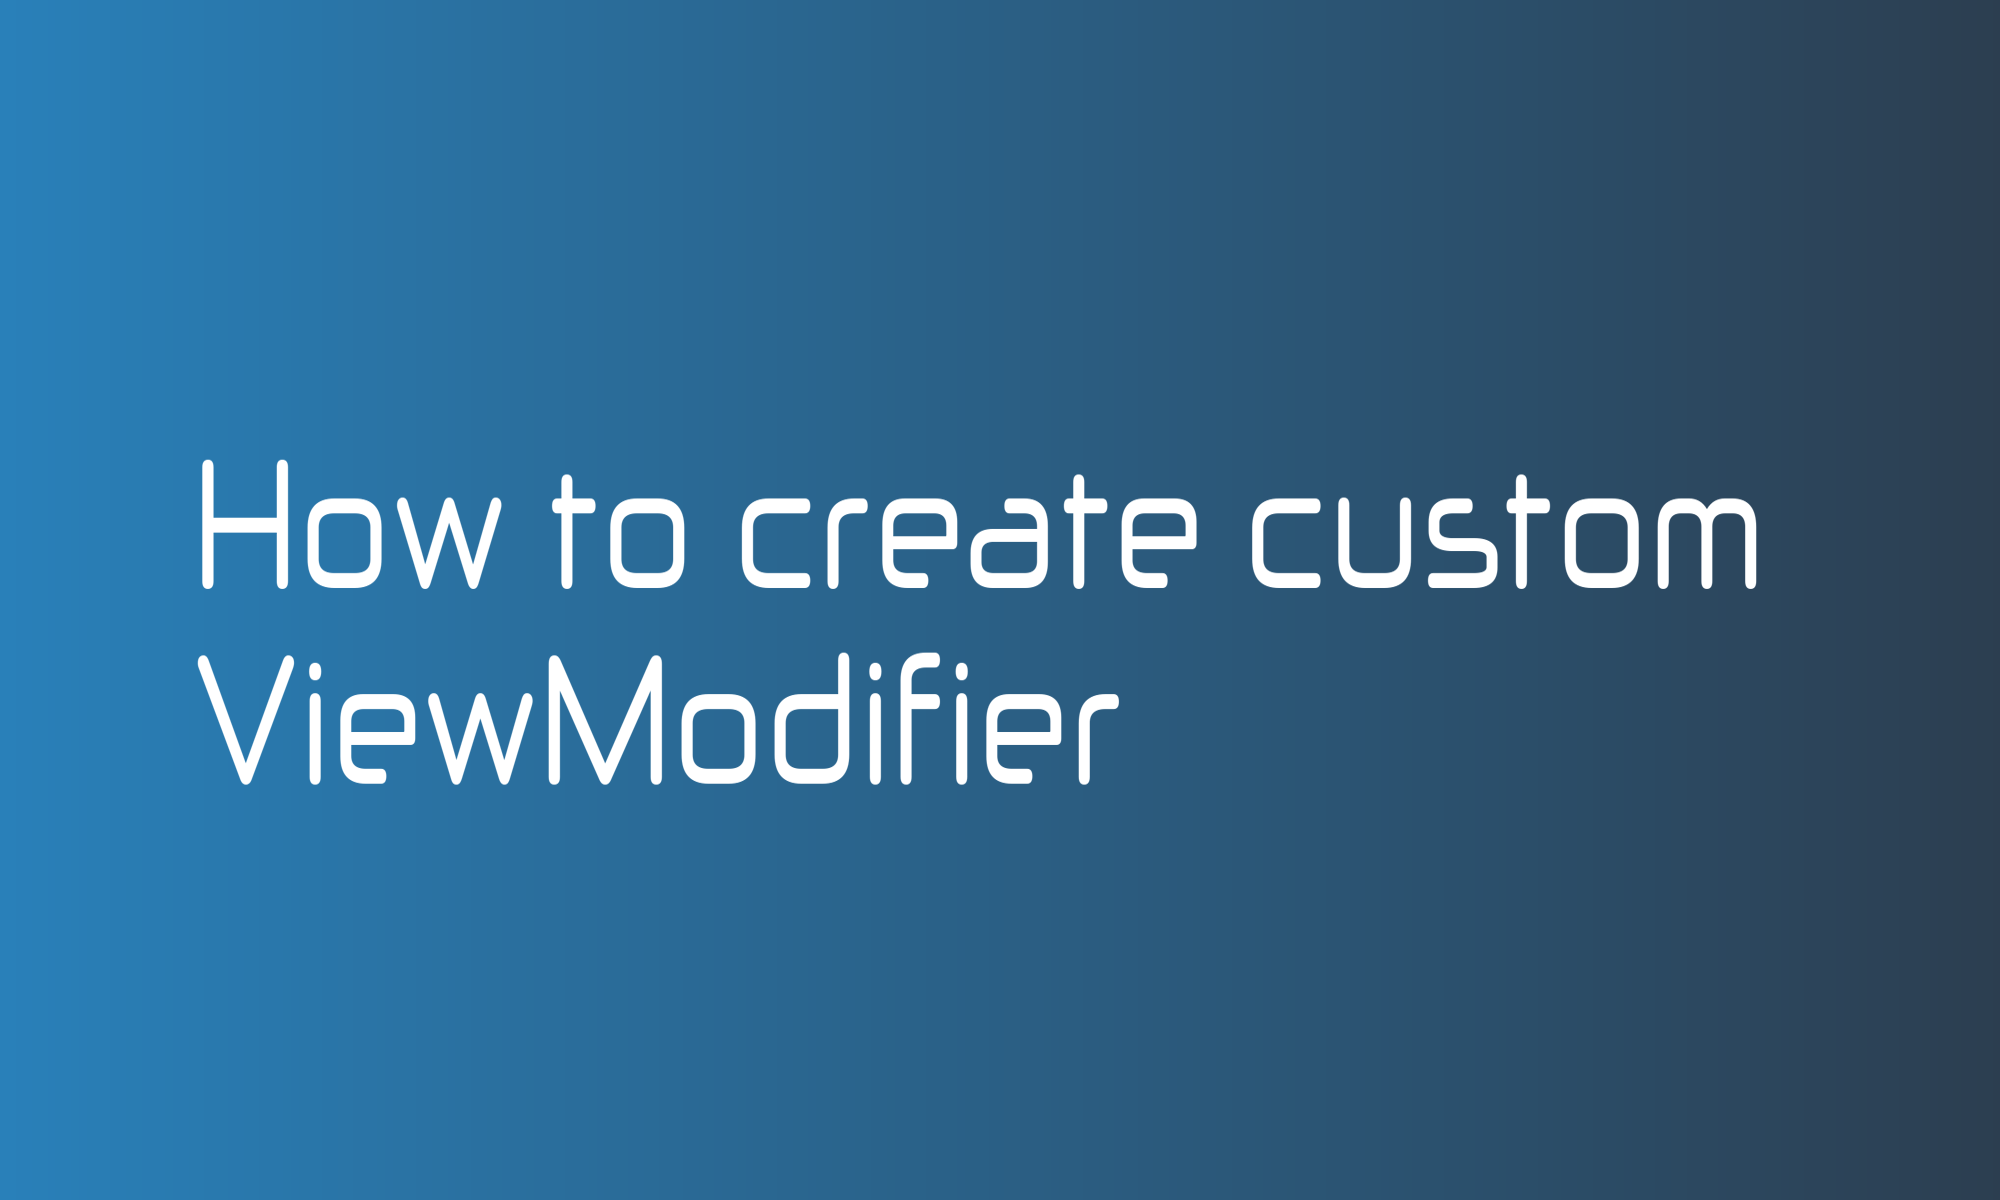 How to create a custom ViewModifier